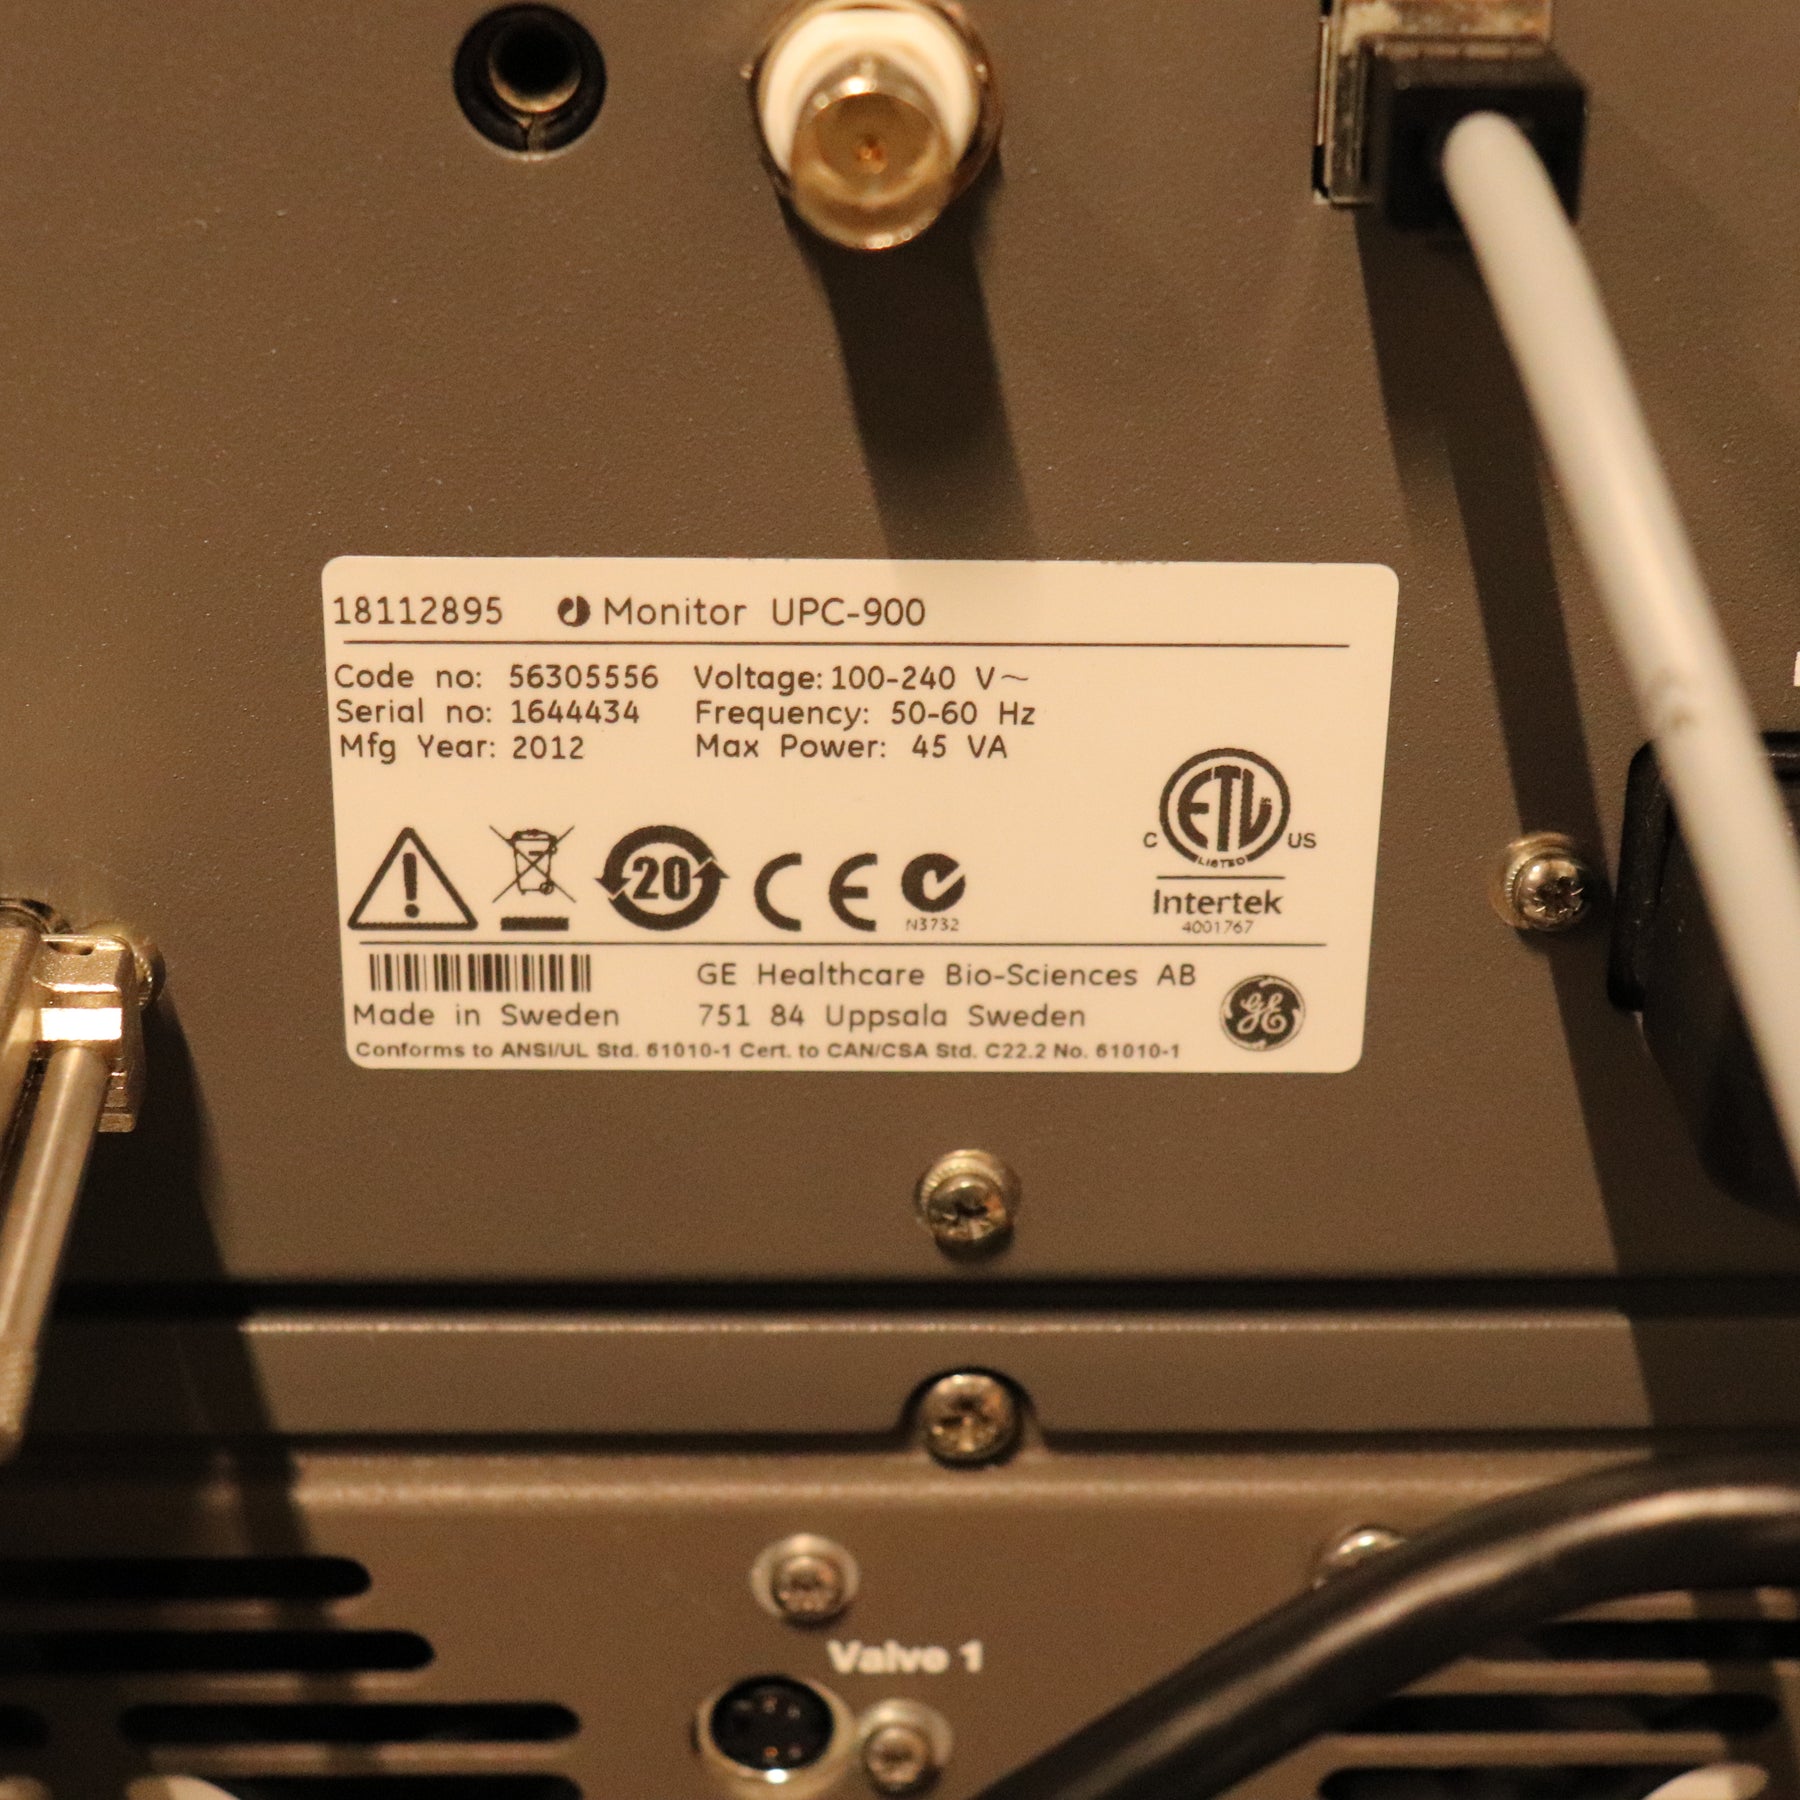 GE AKTA FPLC Purifier 10 System with Frac-950 P10F UPC 10